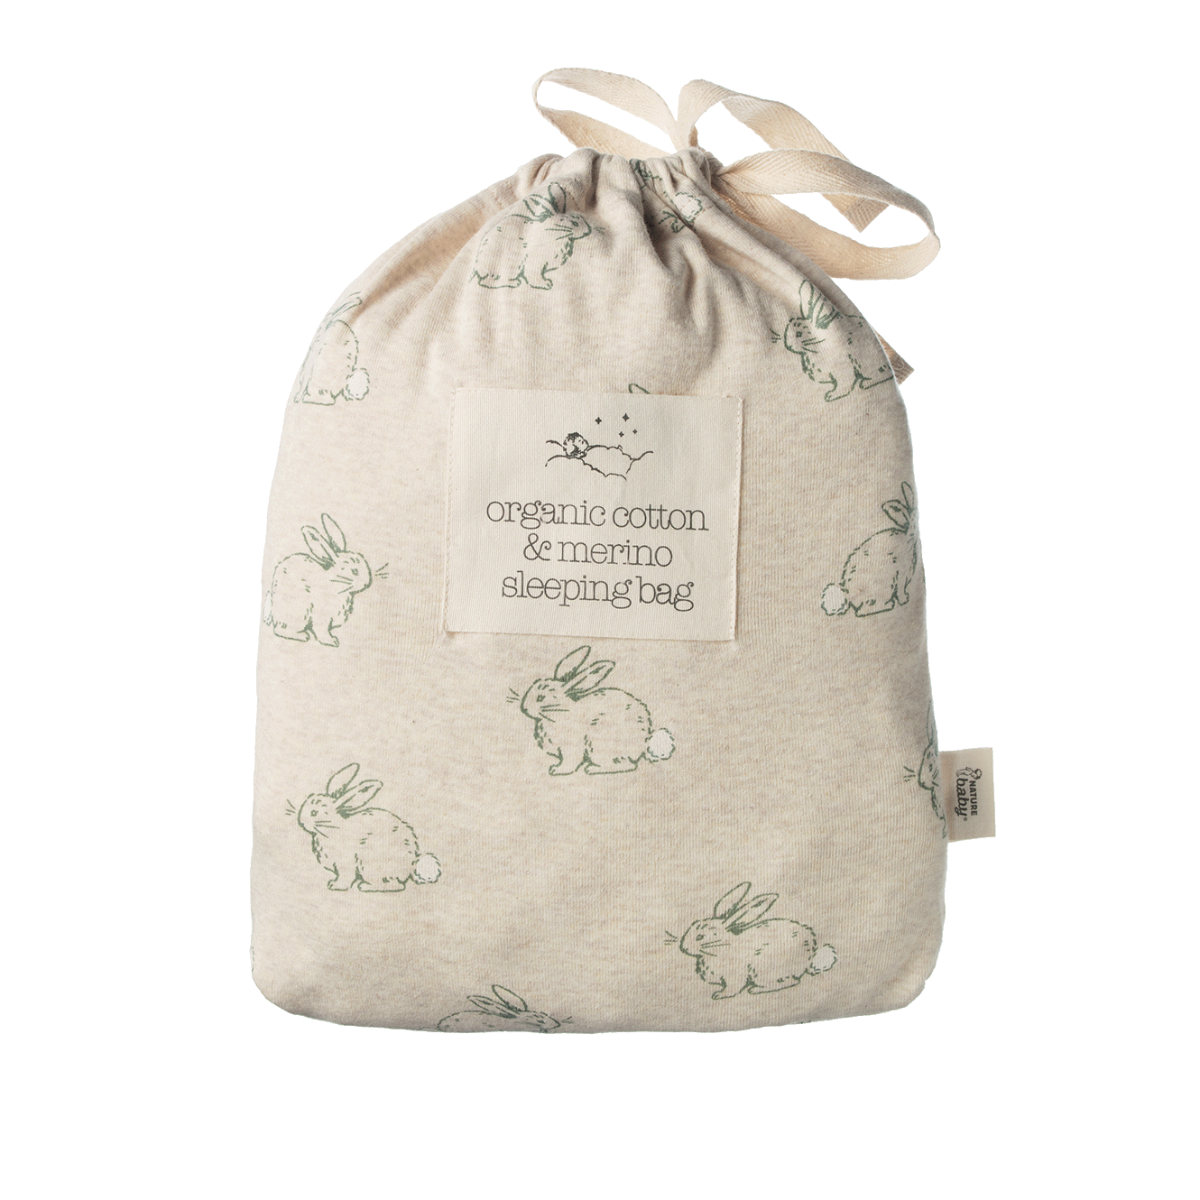 Cotton & Merino sleeping bag - COTTAGE BUNNY OATMEAL MARL PRINT 0-24M |  Nature Baby